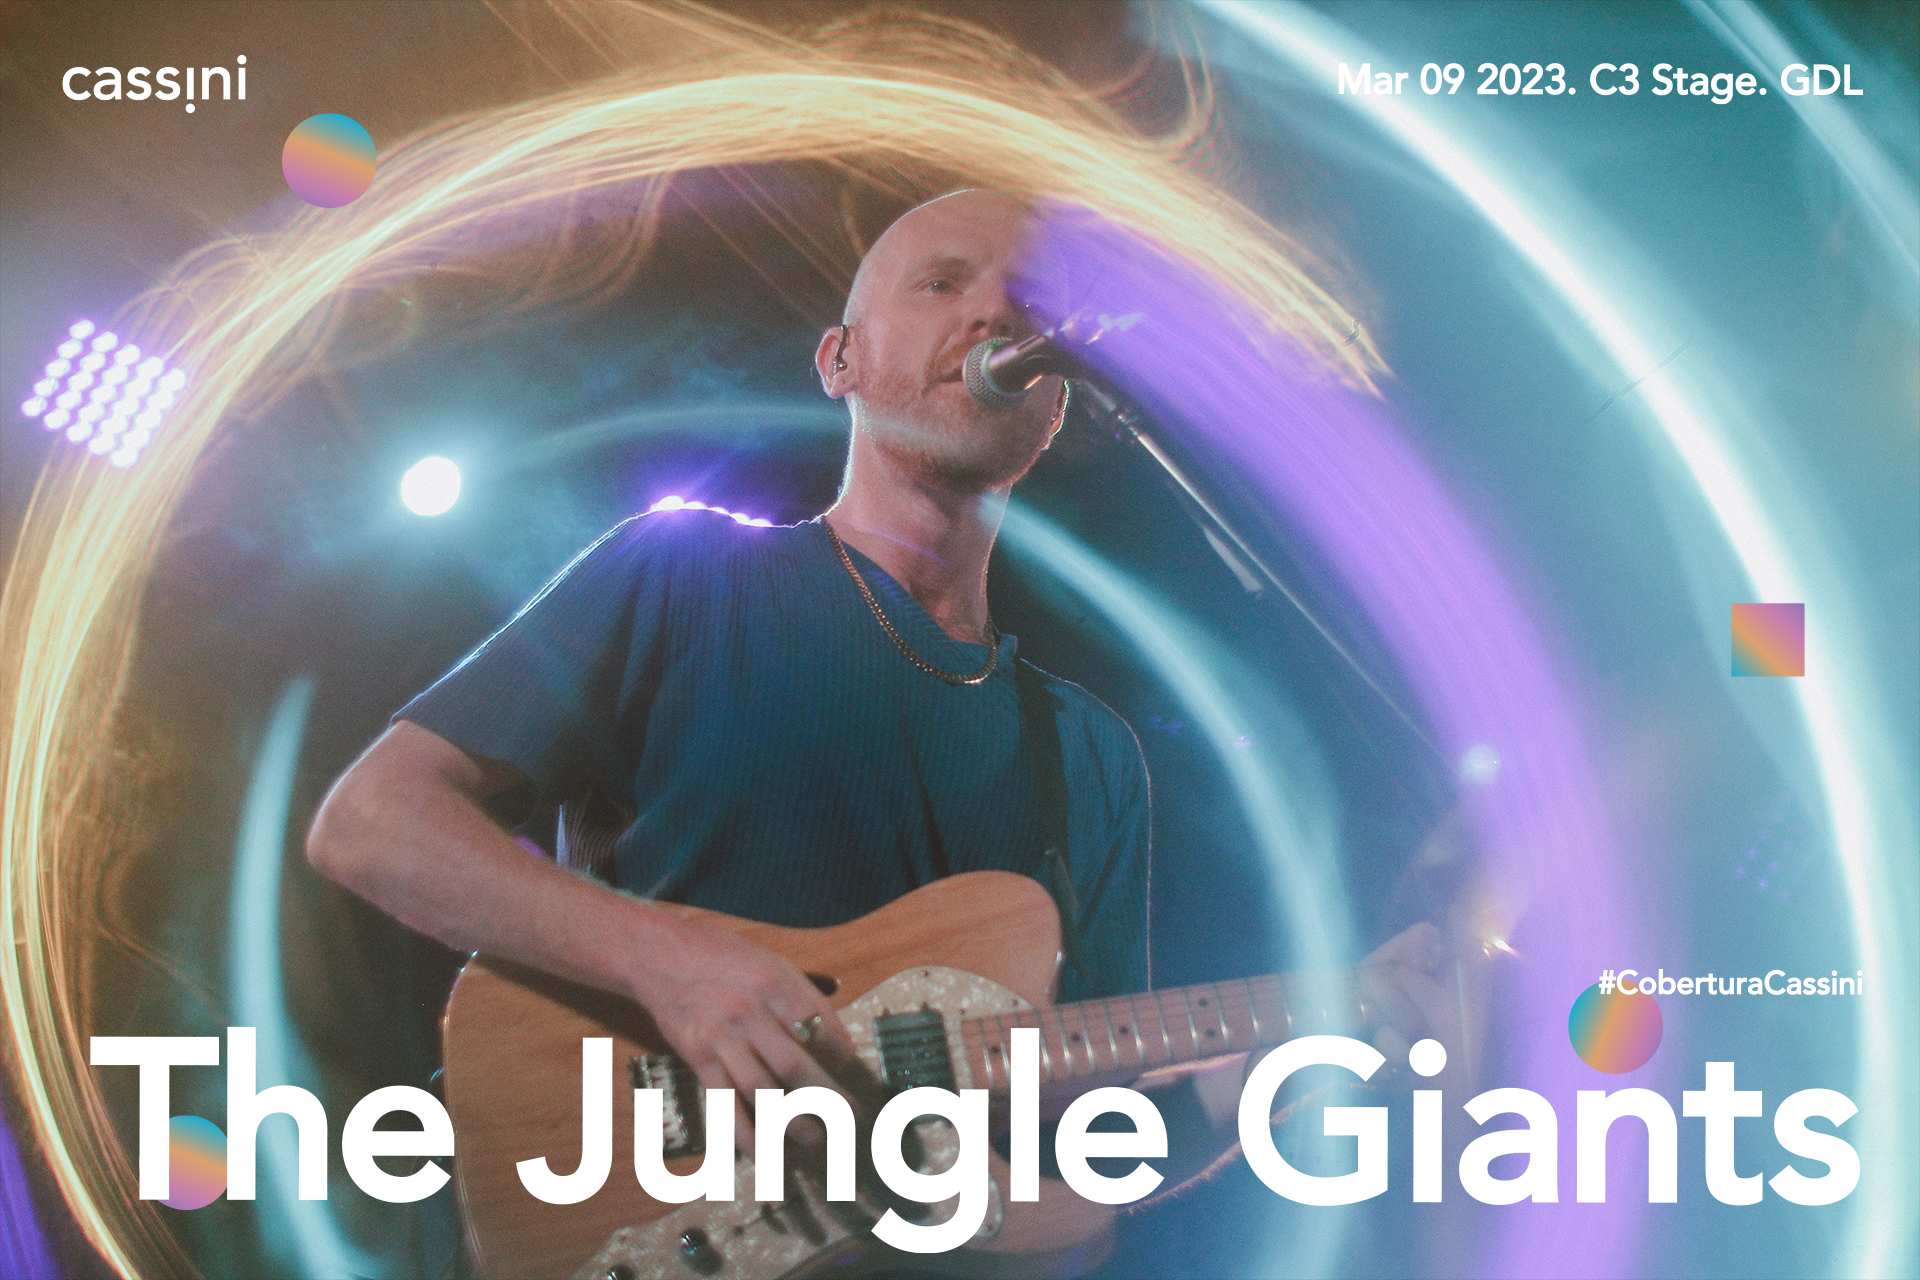 La vida es increíble, el mensaje de The Jungle Giants en Guadalajara